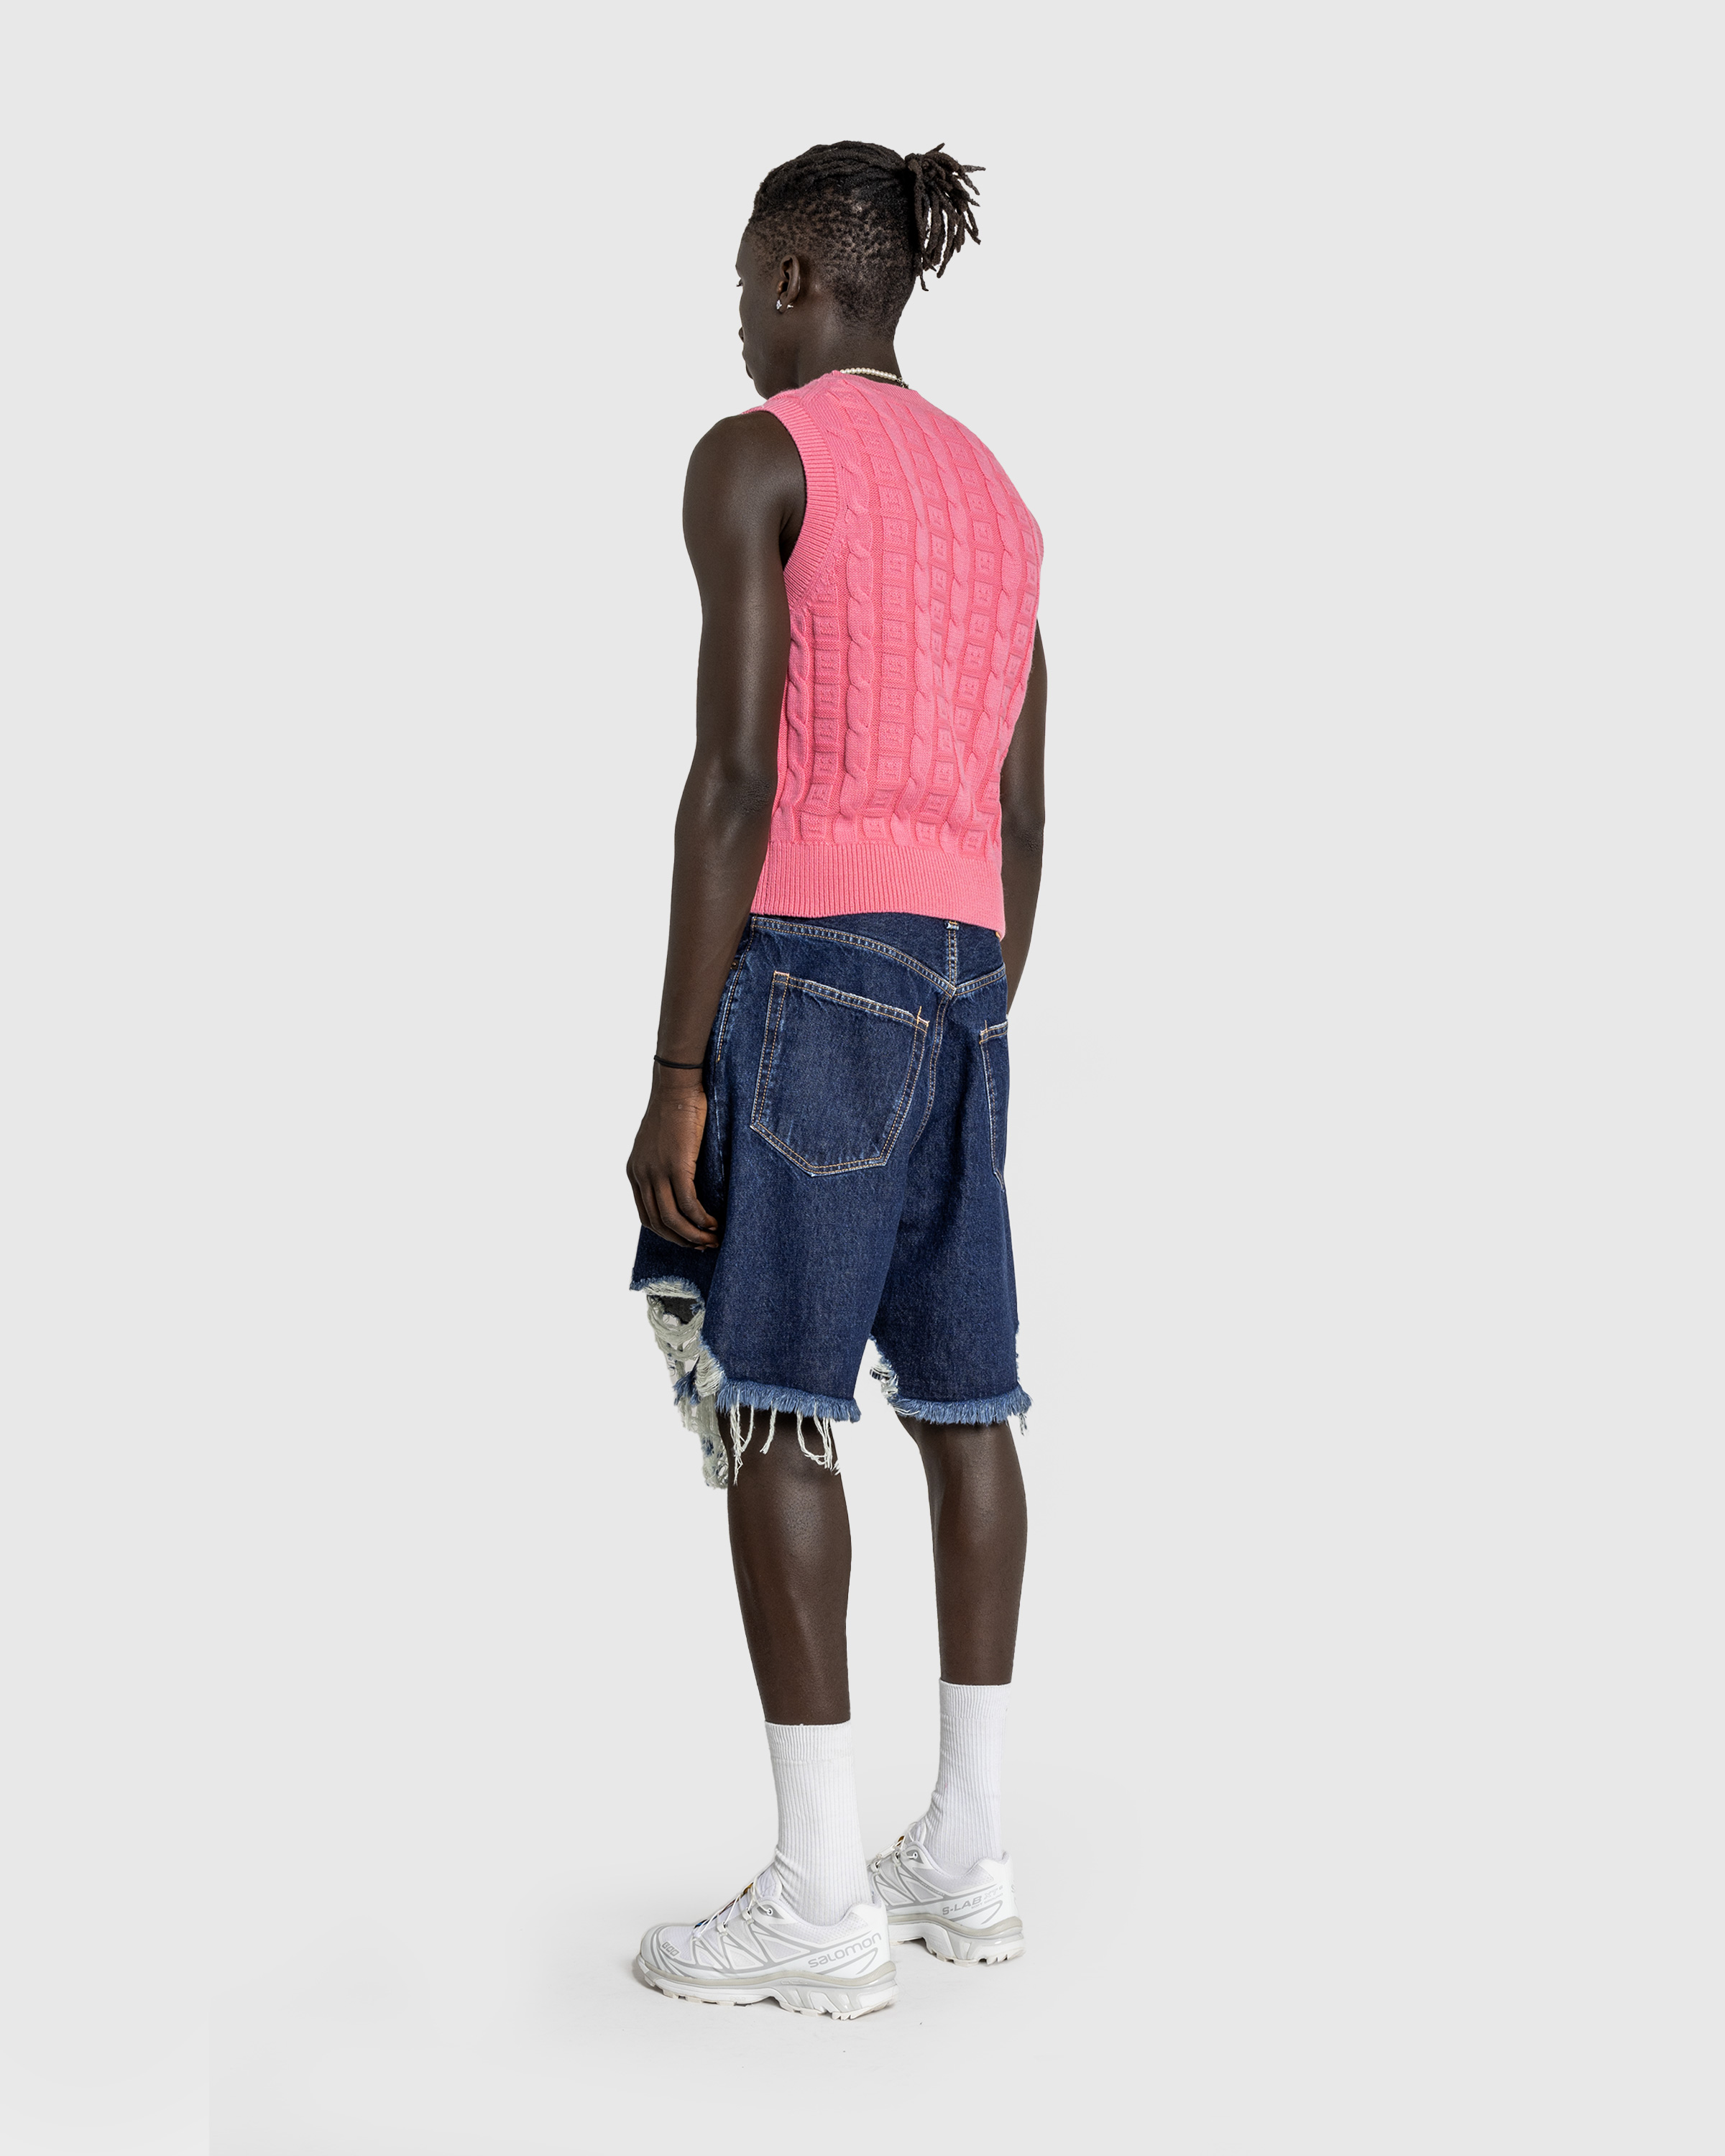 Acne Studios – Distressed Denim Shorts Mid Blue - Cargo Shorts - Blue - Image 4